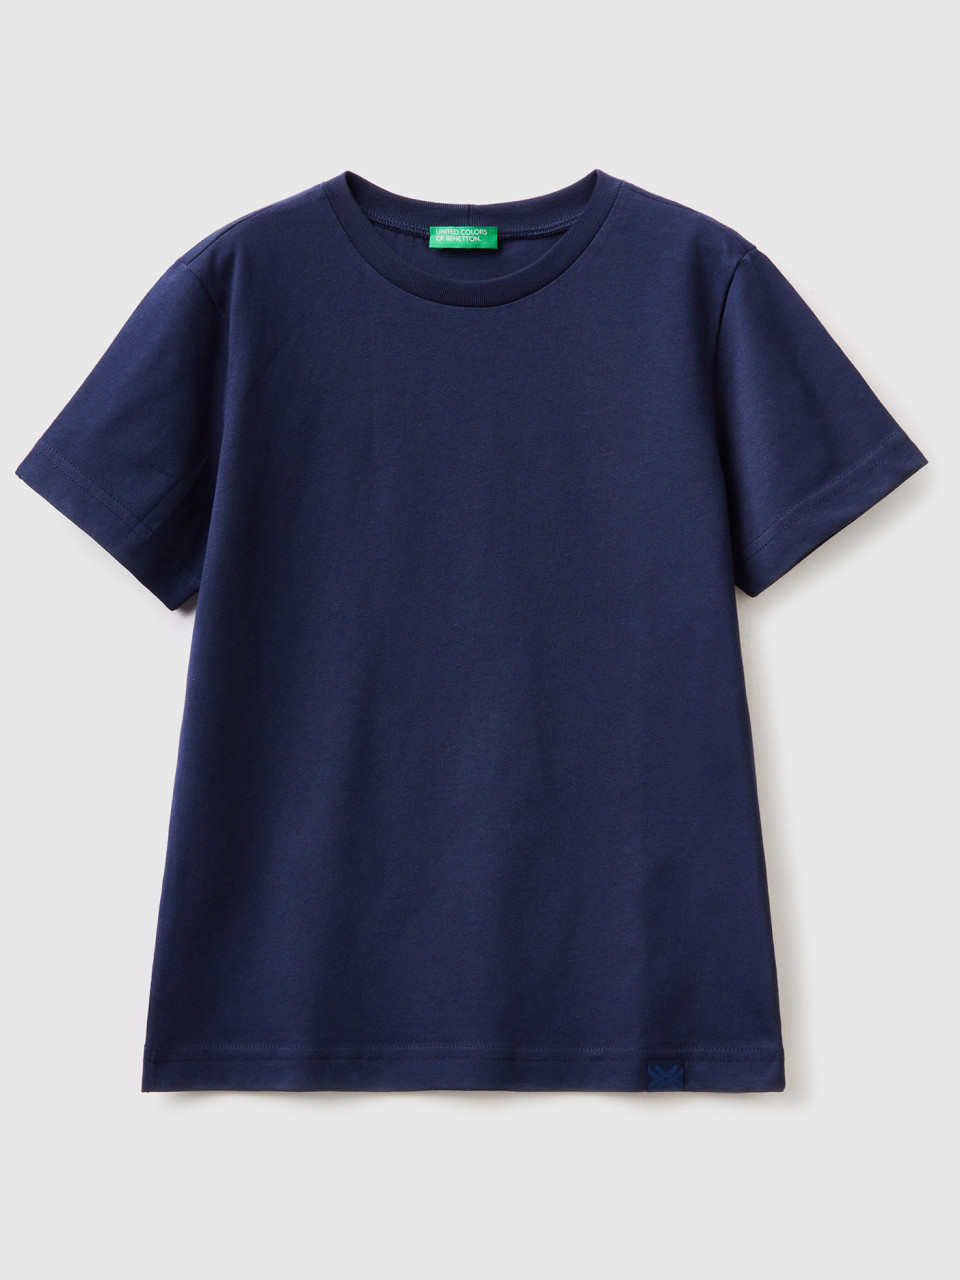 Benetton, T-shirt In Cotone Biologico, Blu Scuro, Bambini